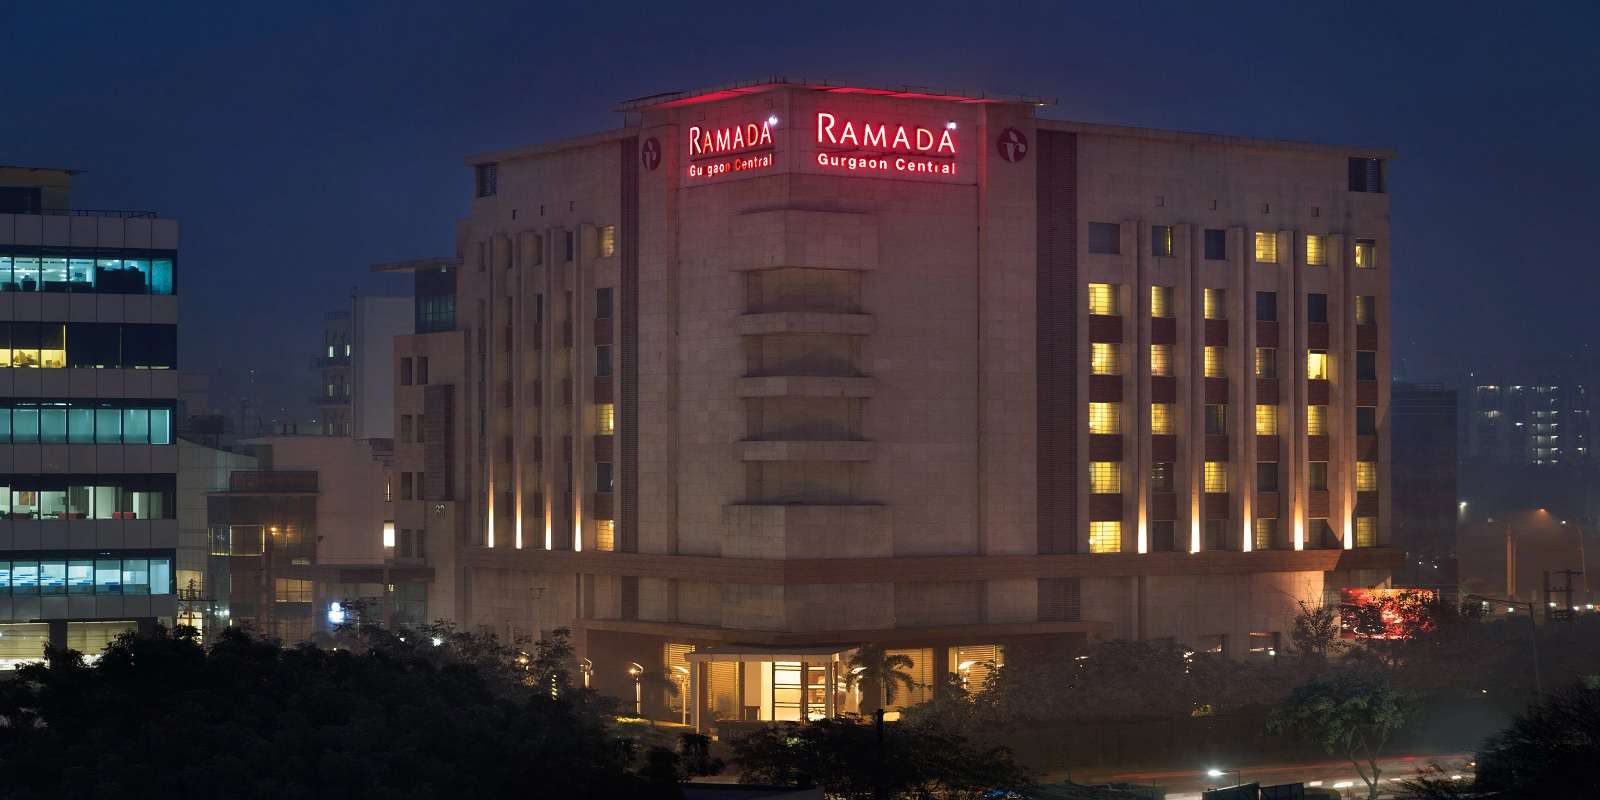 Ramada Gurgaon Central Hotel,  Sector 31